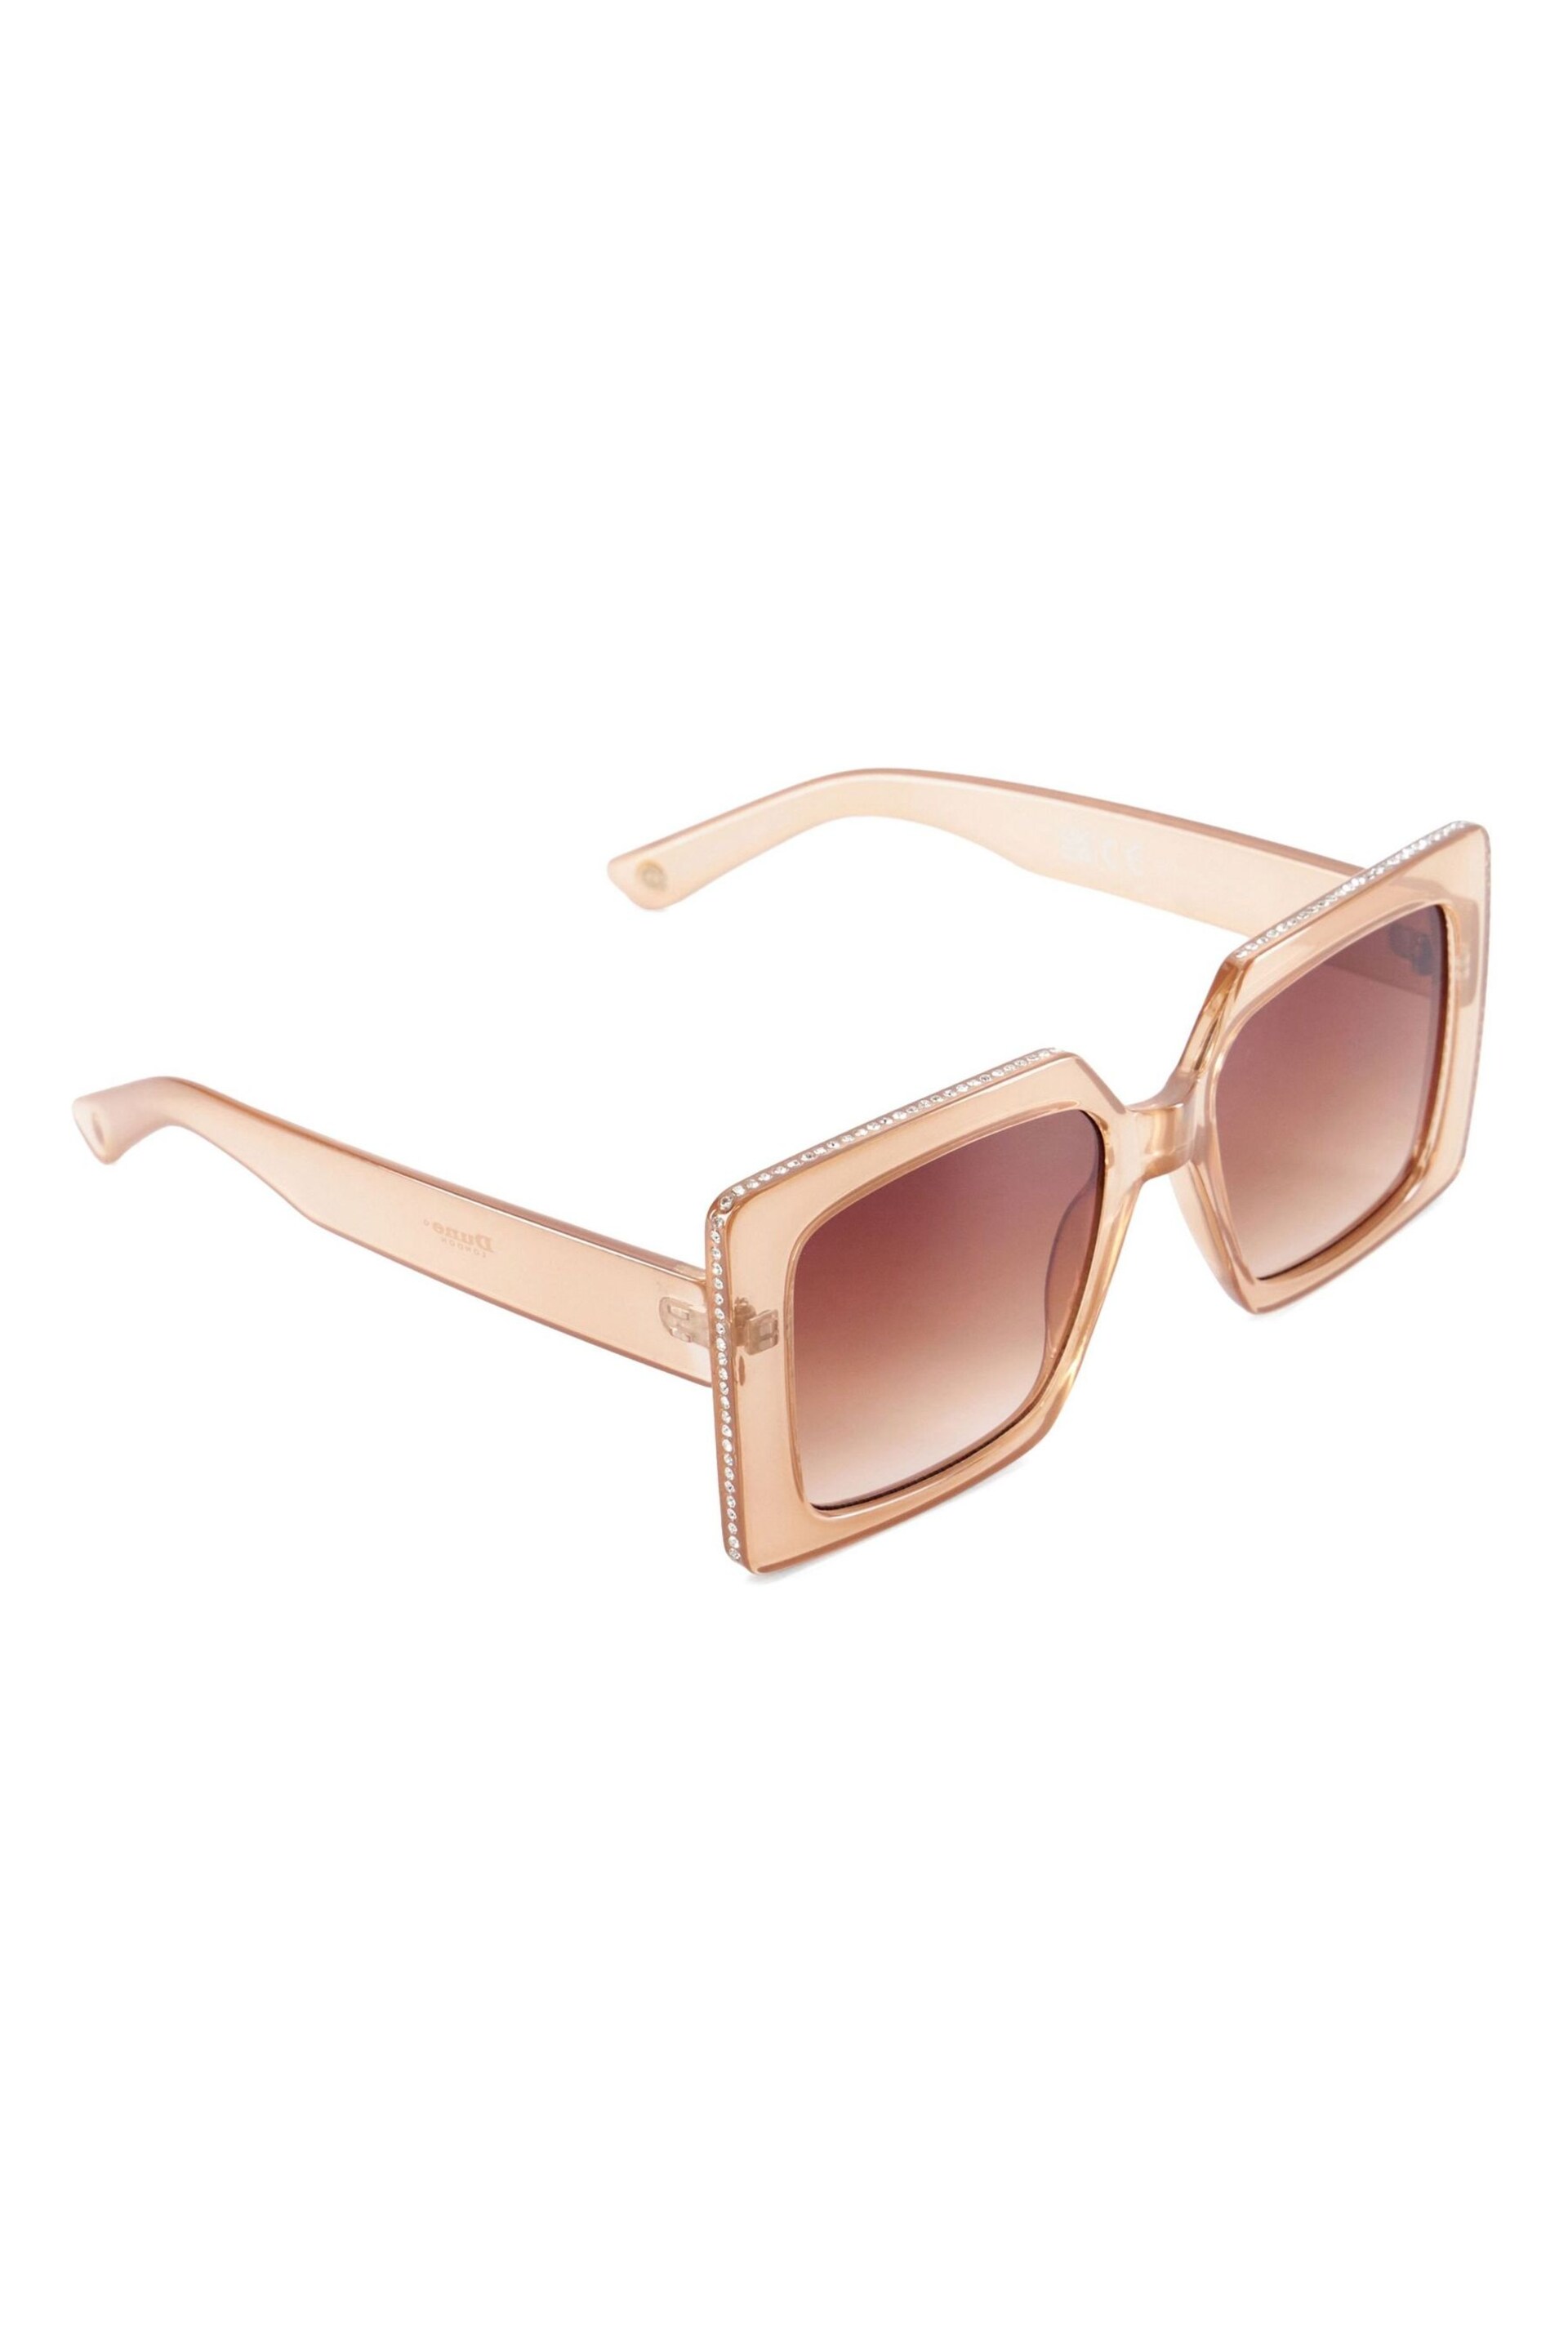 Dune London Pink Glitzy Diamanté Rectangular Sunglasses - Image 2 of 5